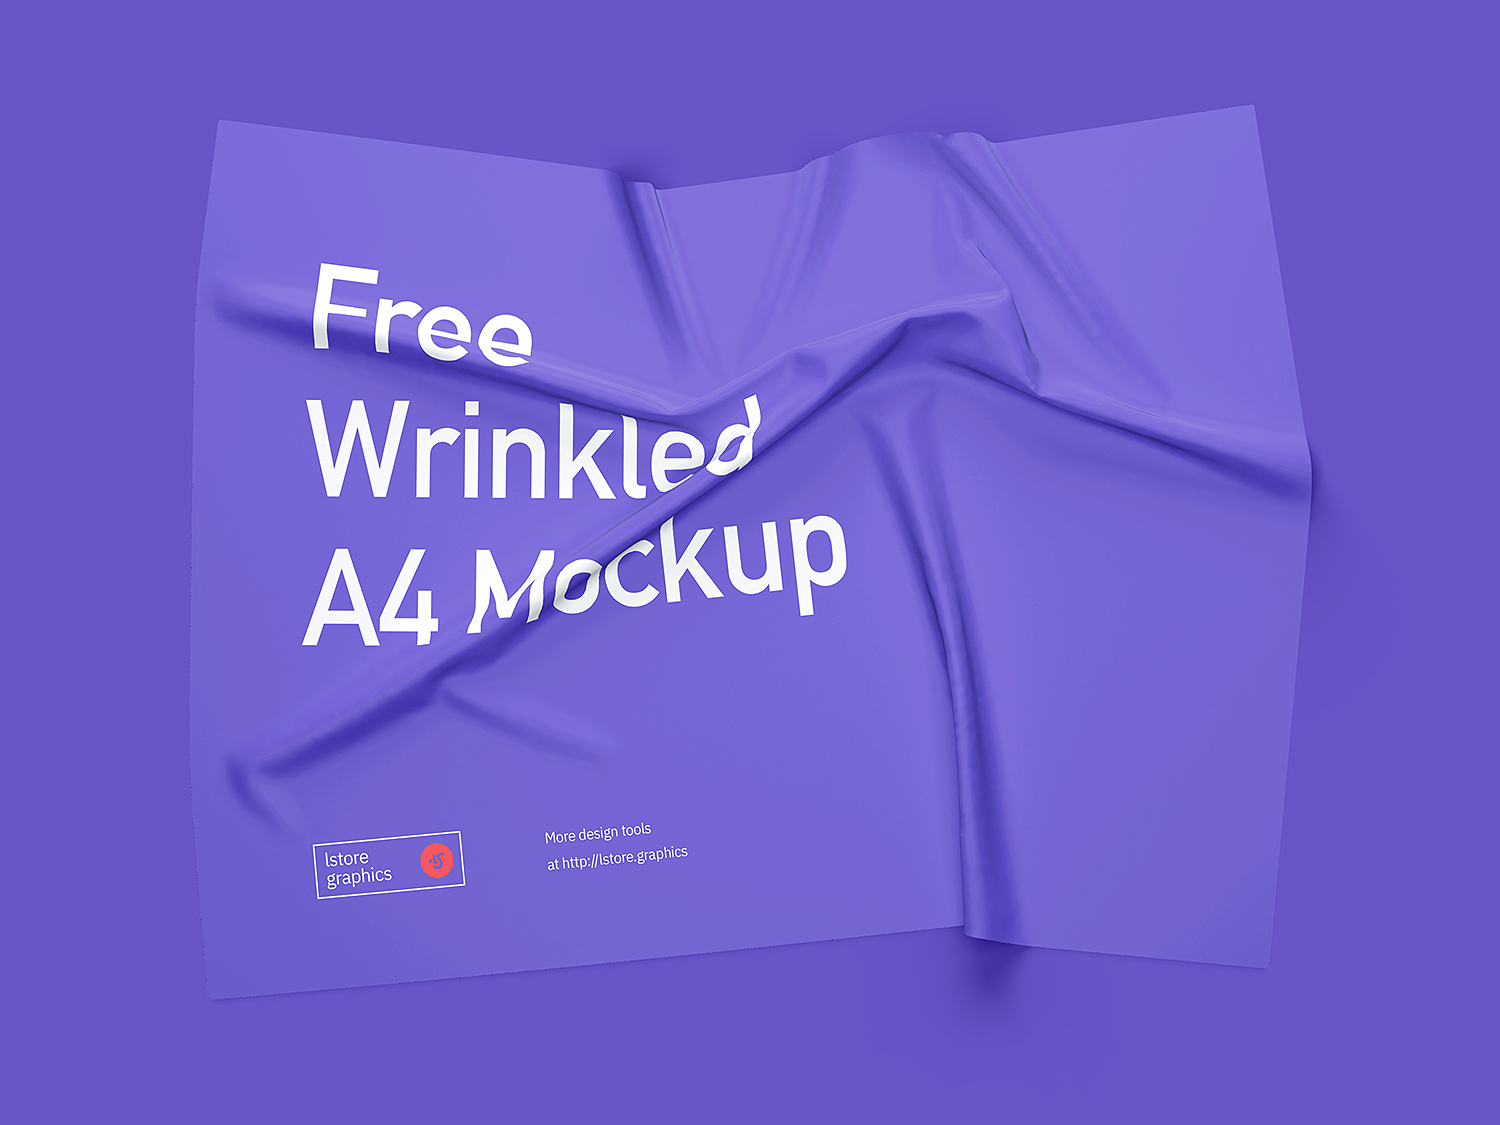 Free-Wrinkled-A4-Mockup-01